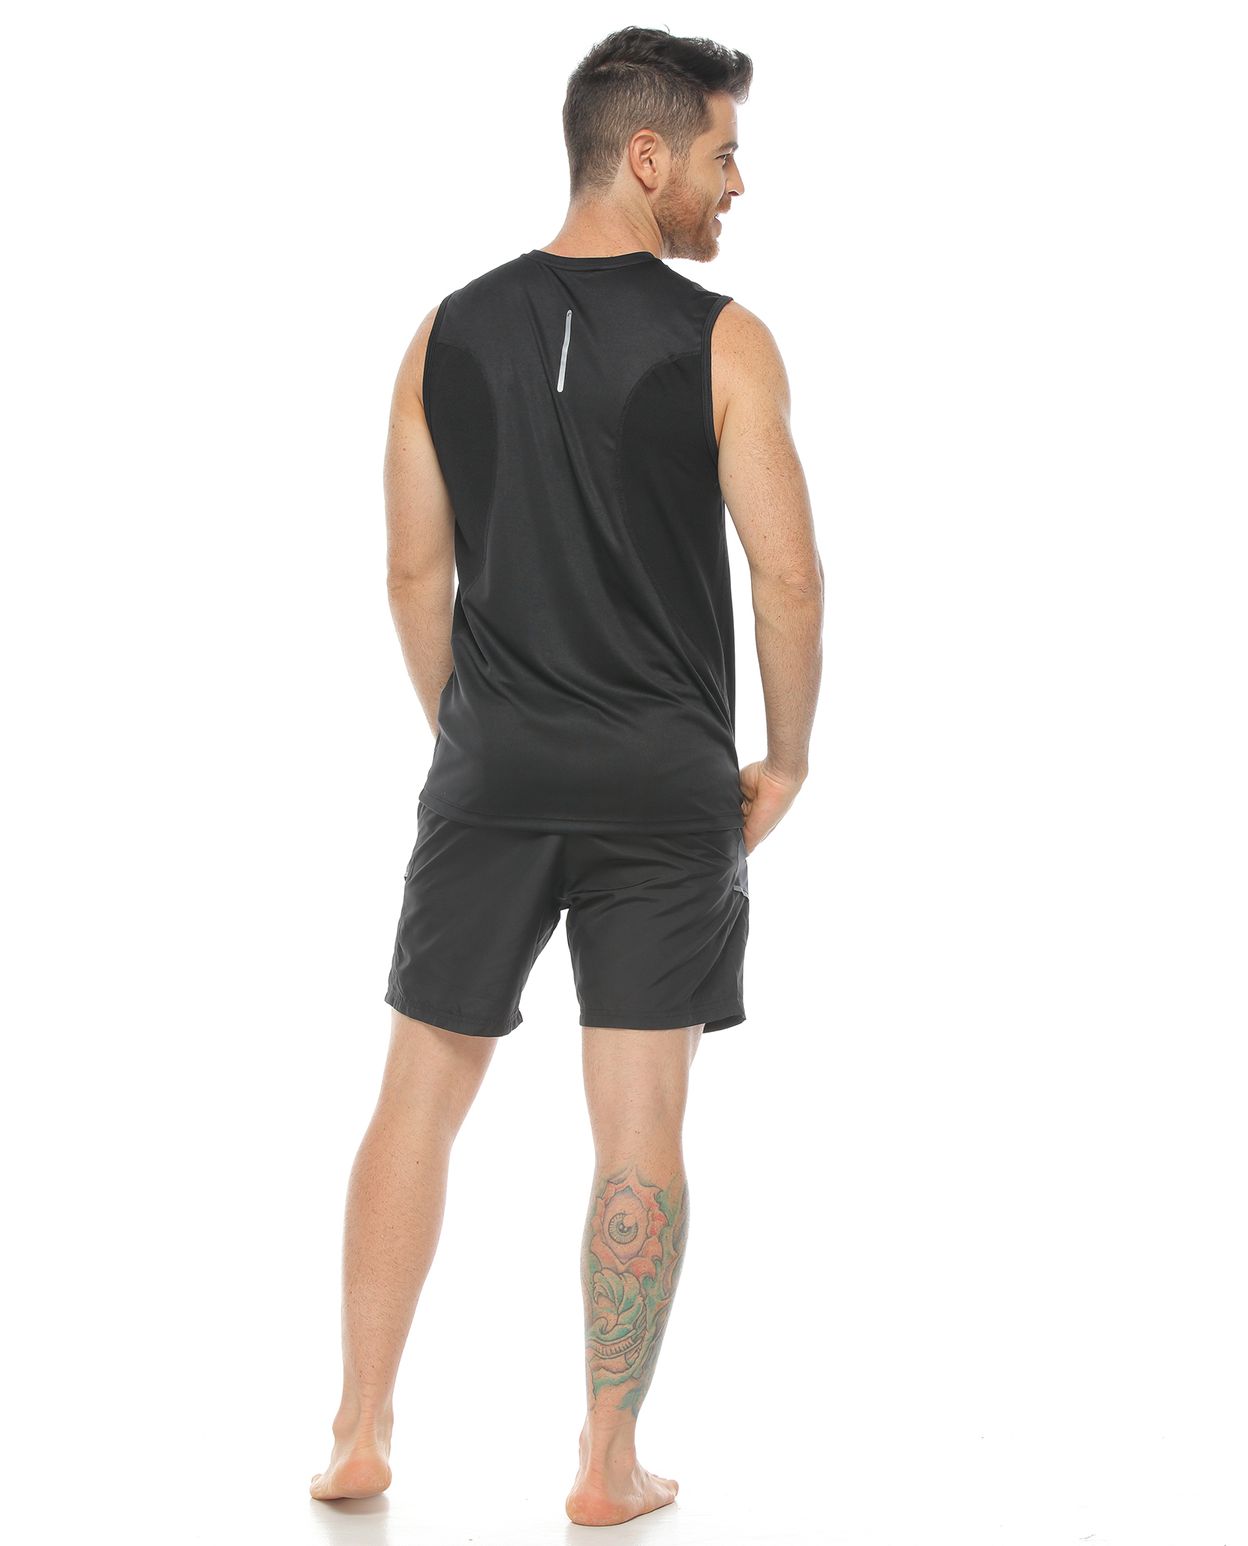 modelo-con-Pantaloneta-Deportiva-Negra-y-esueleto-deportivo-para-Hombre-parte-trasera